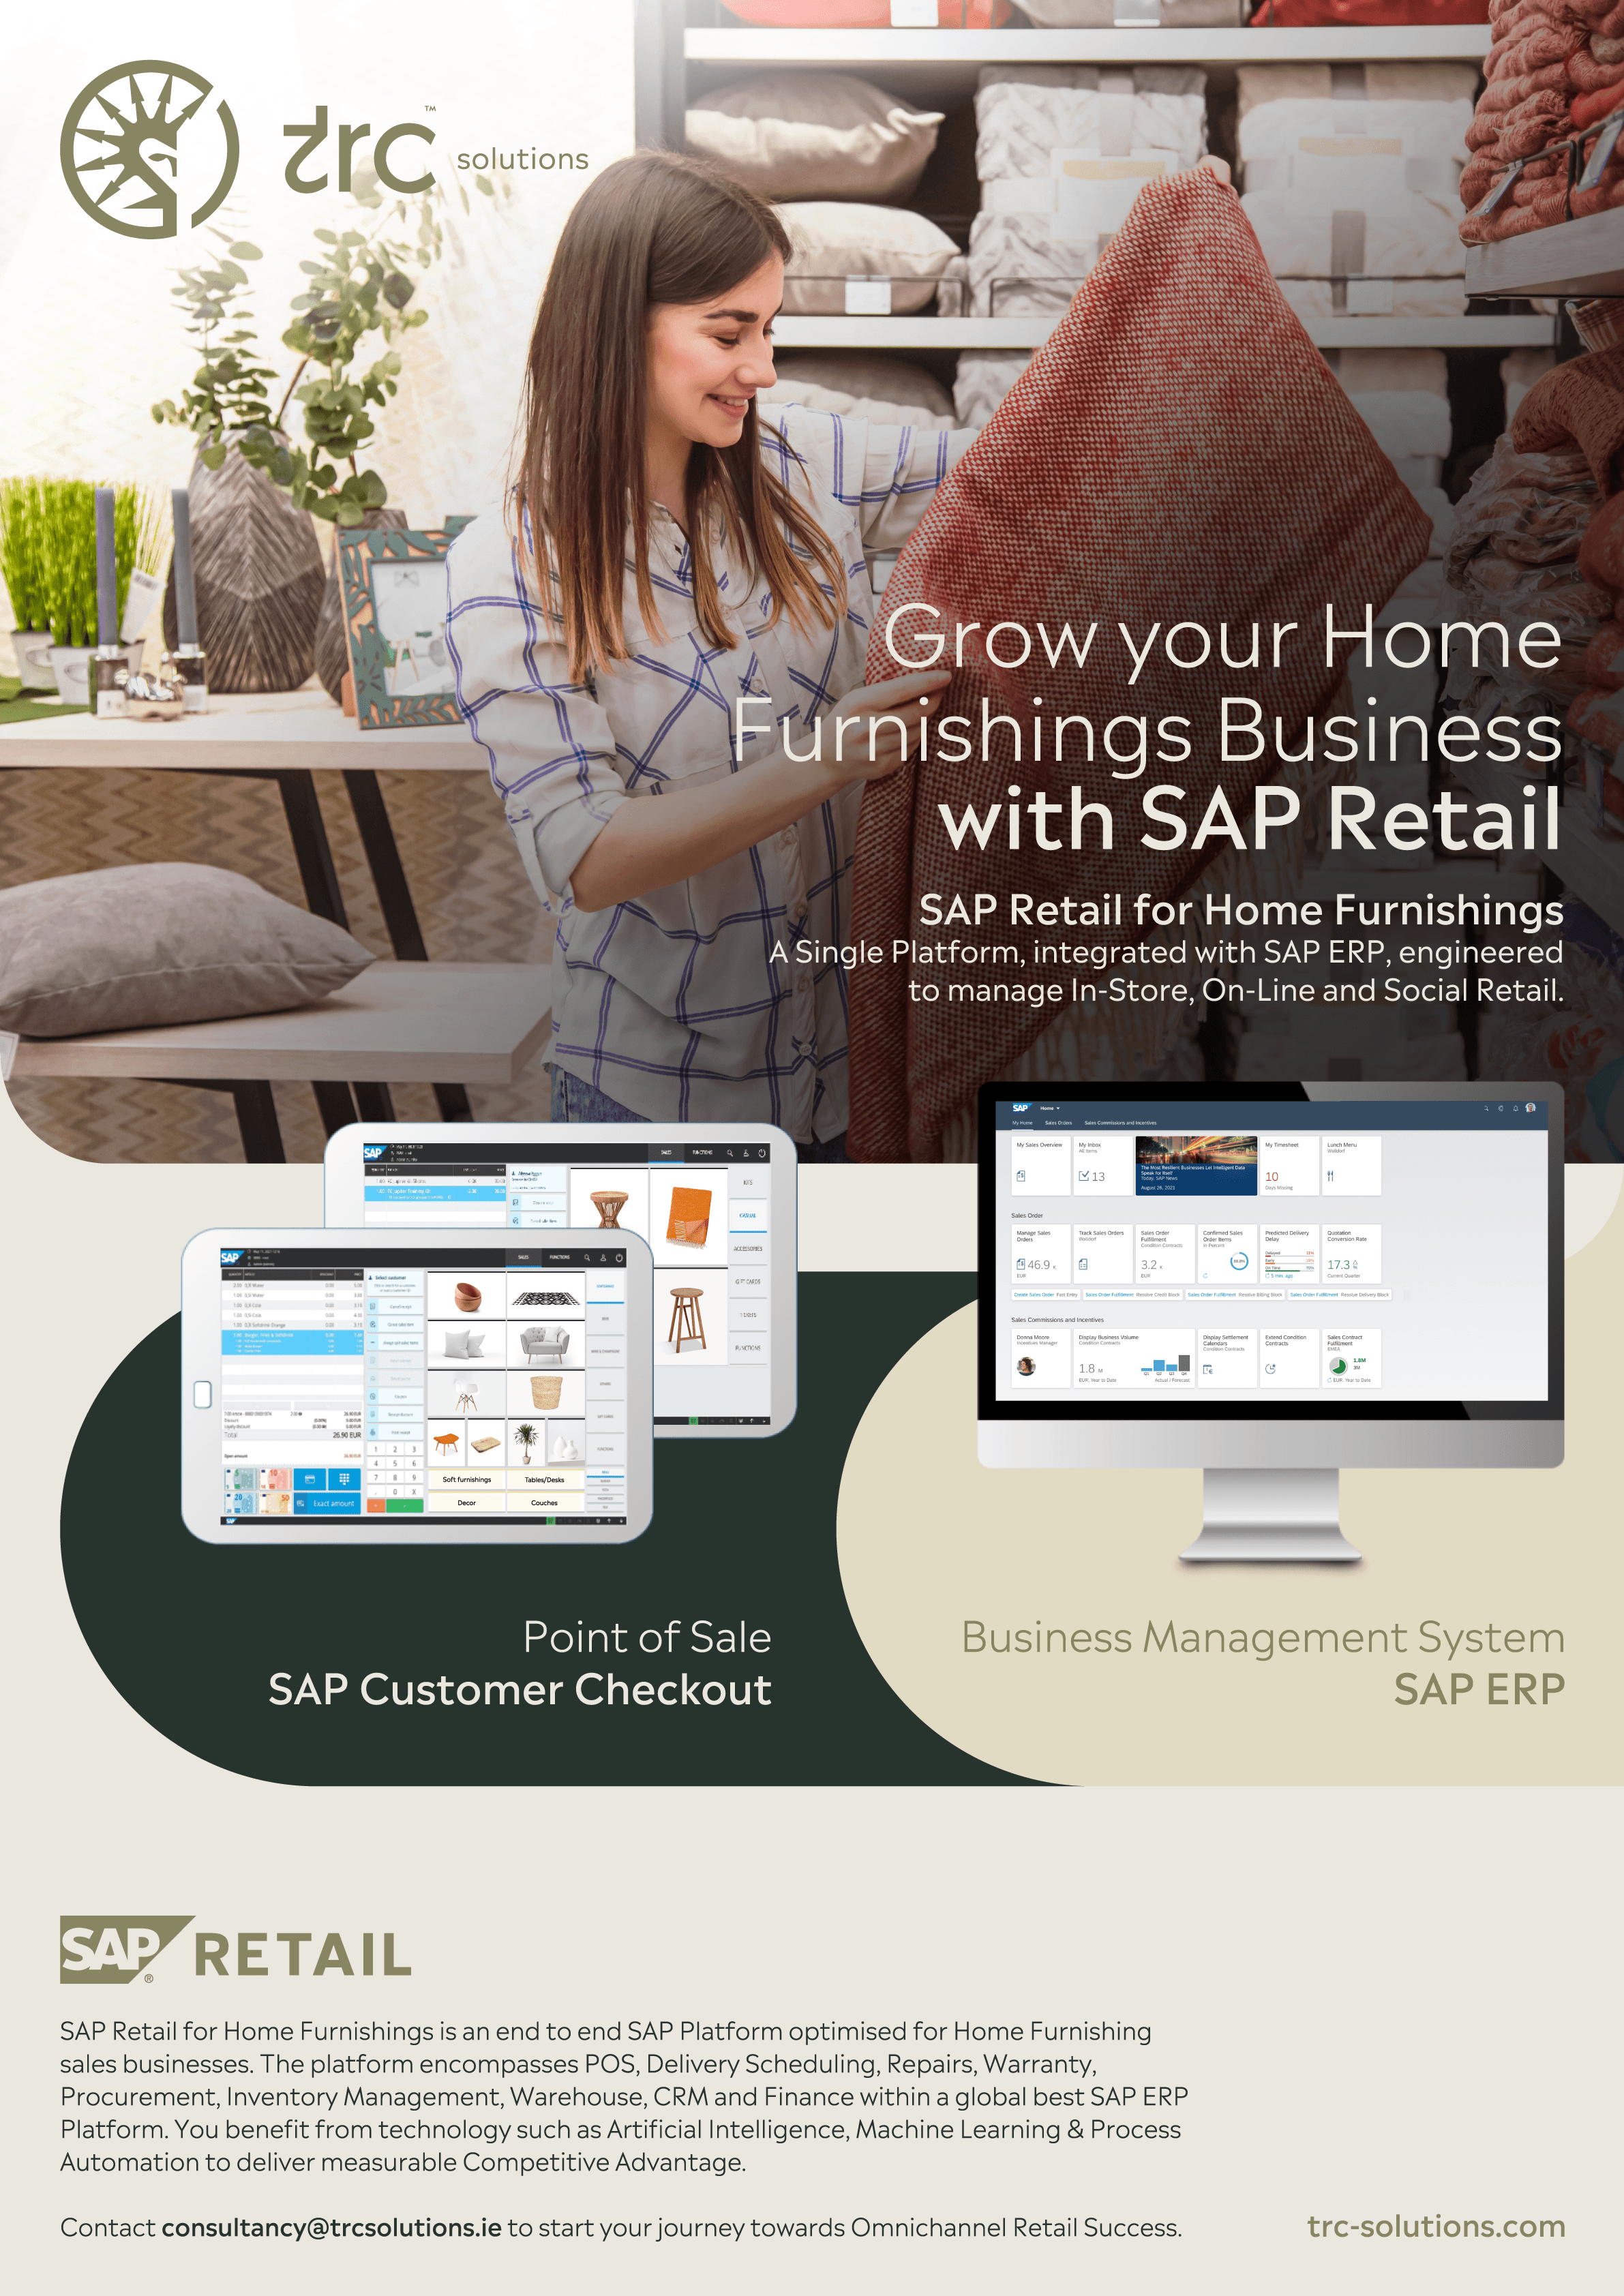 SAP Retail for Home Furnishings